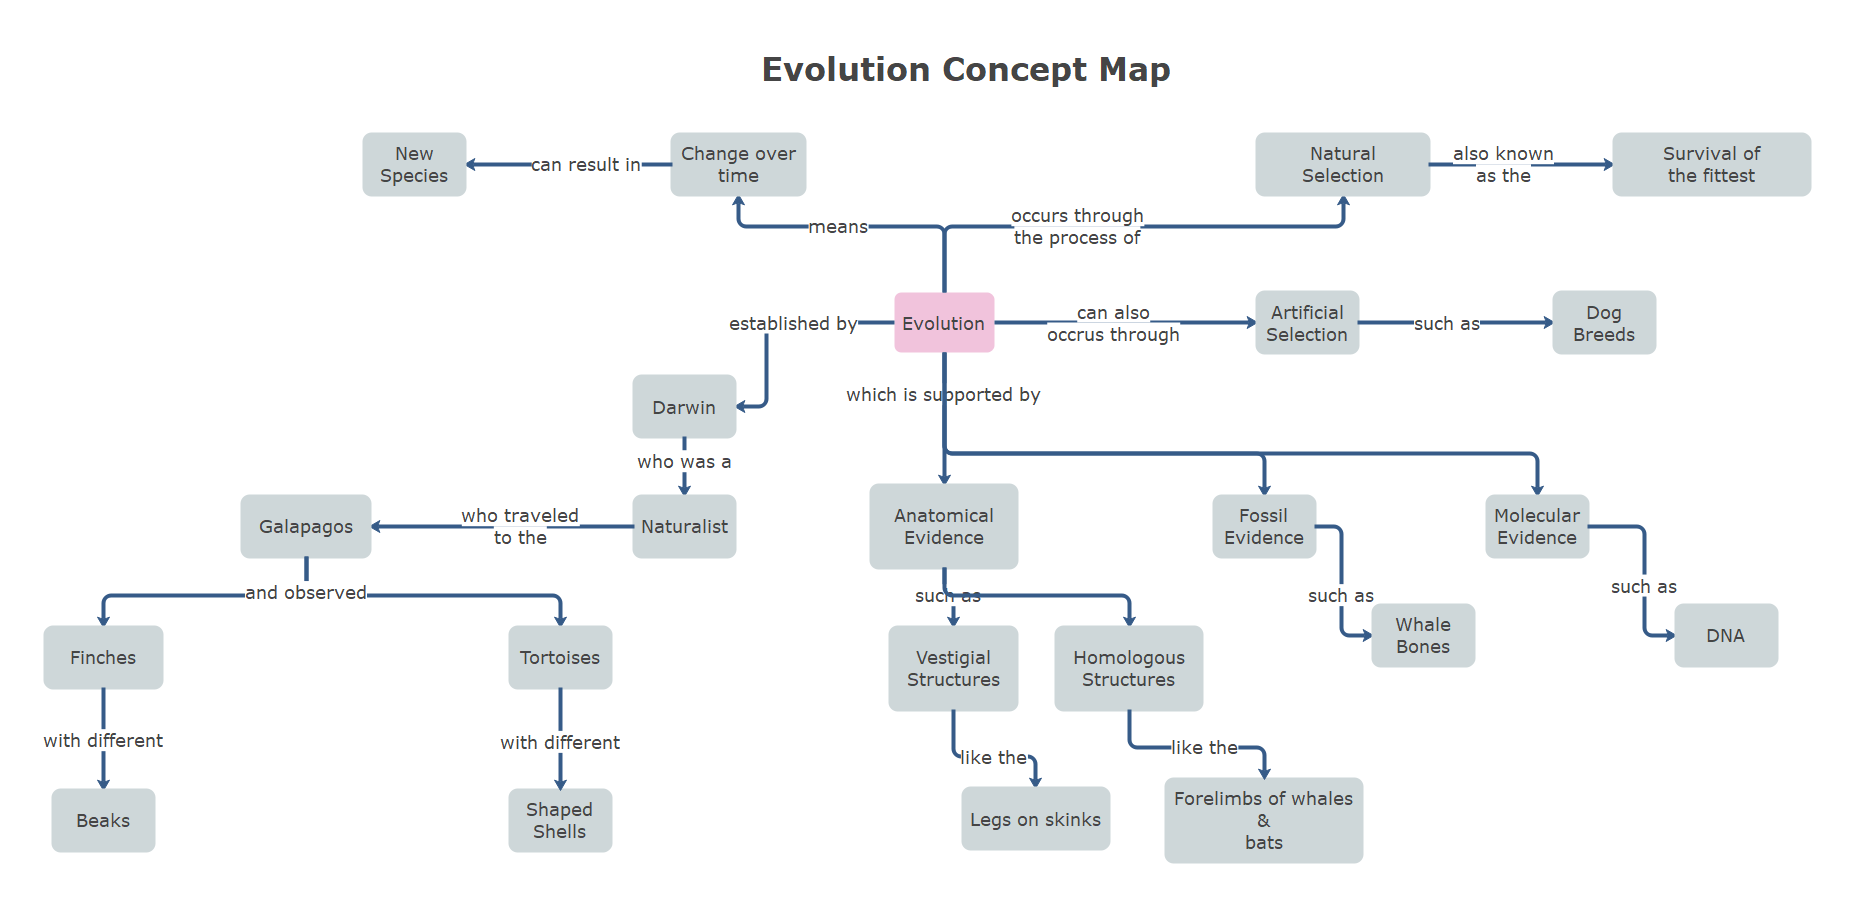 Evolution Concept Map